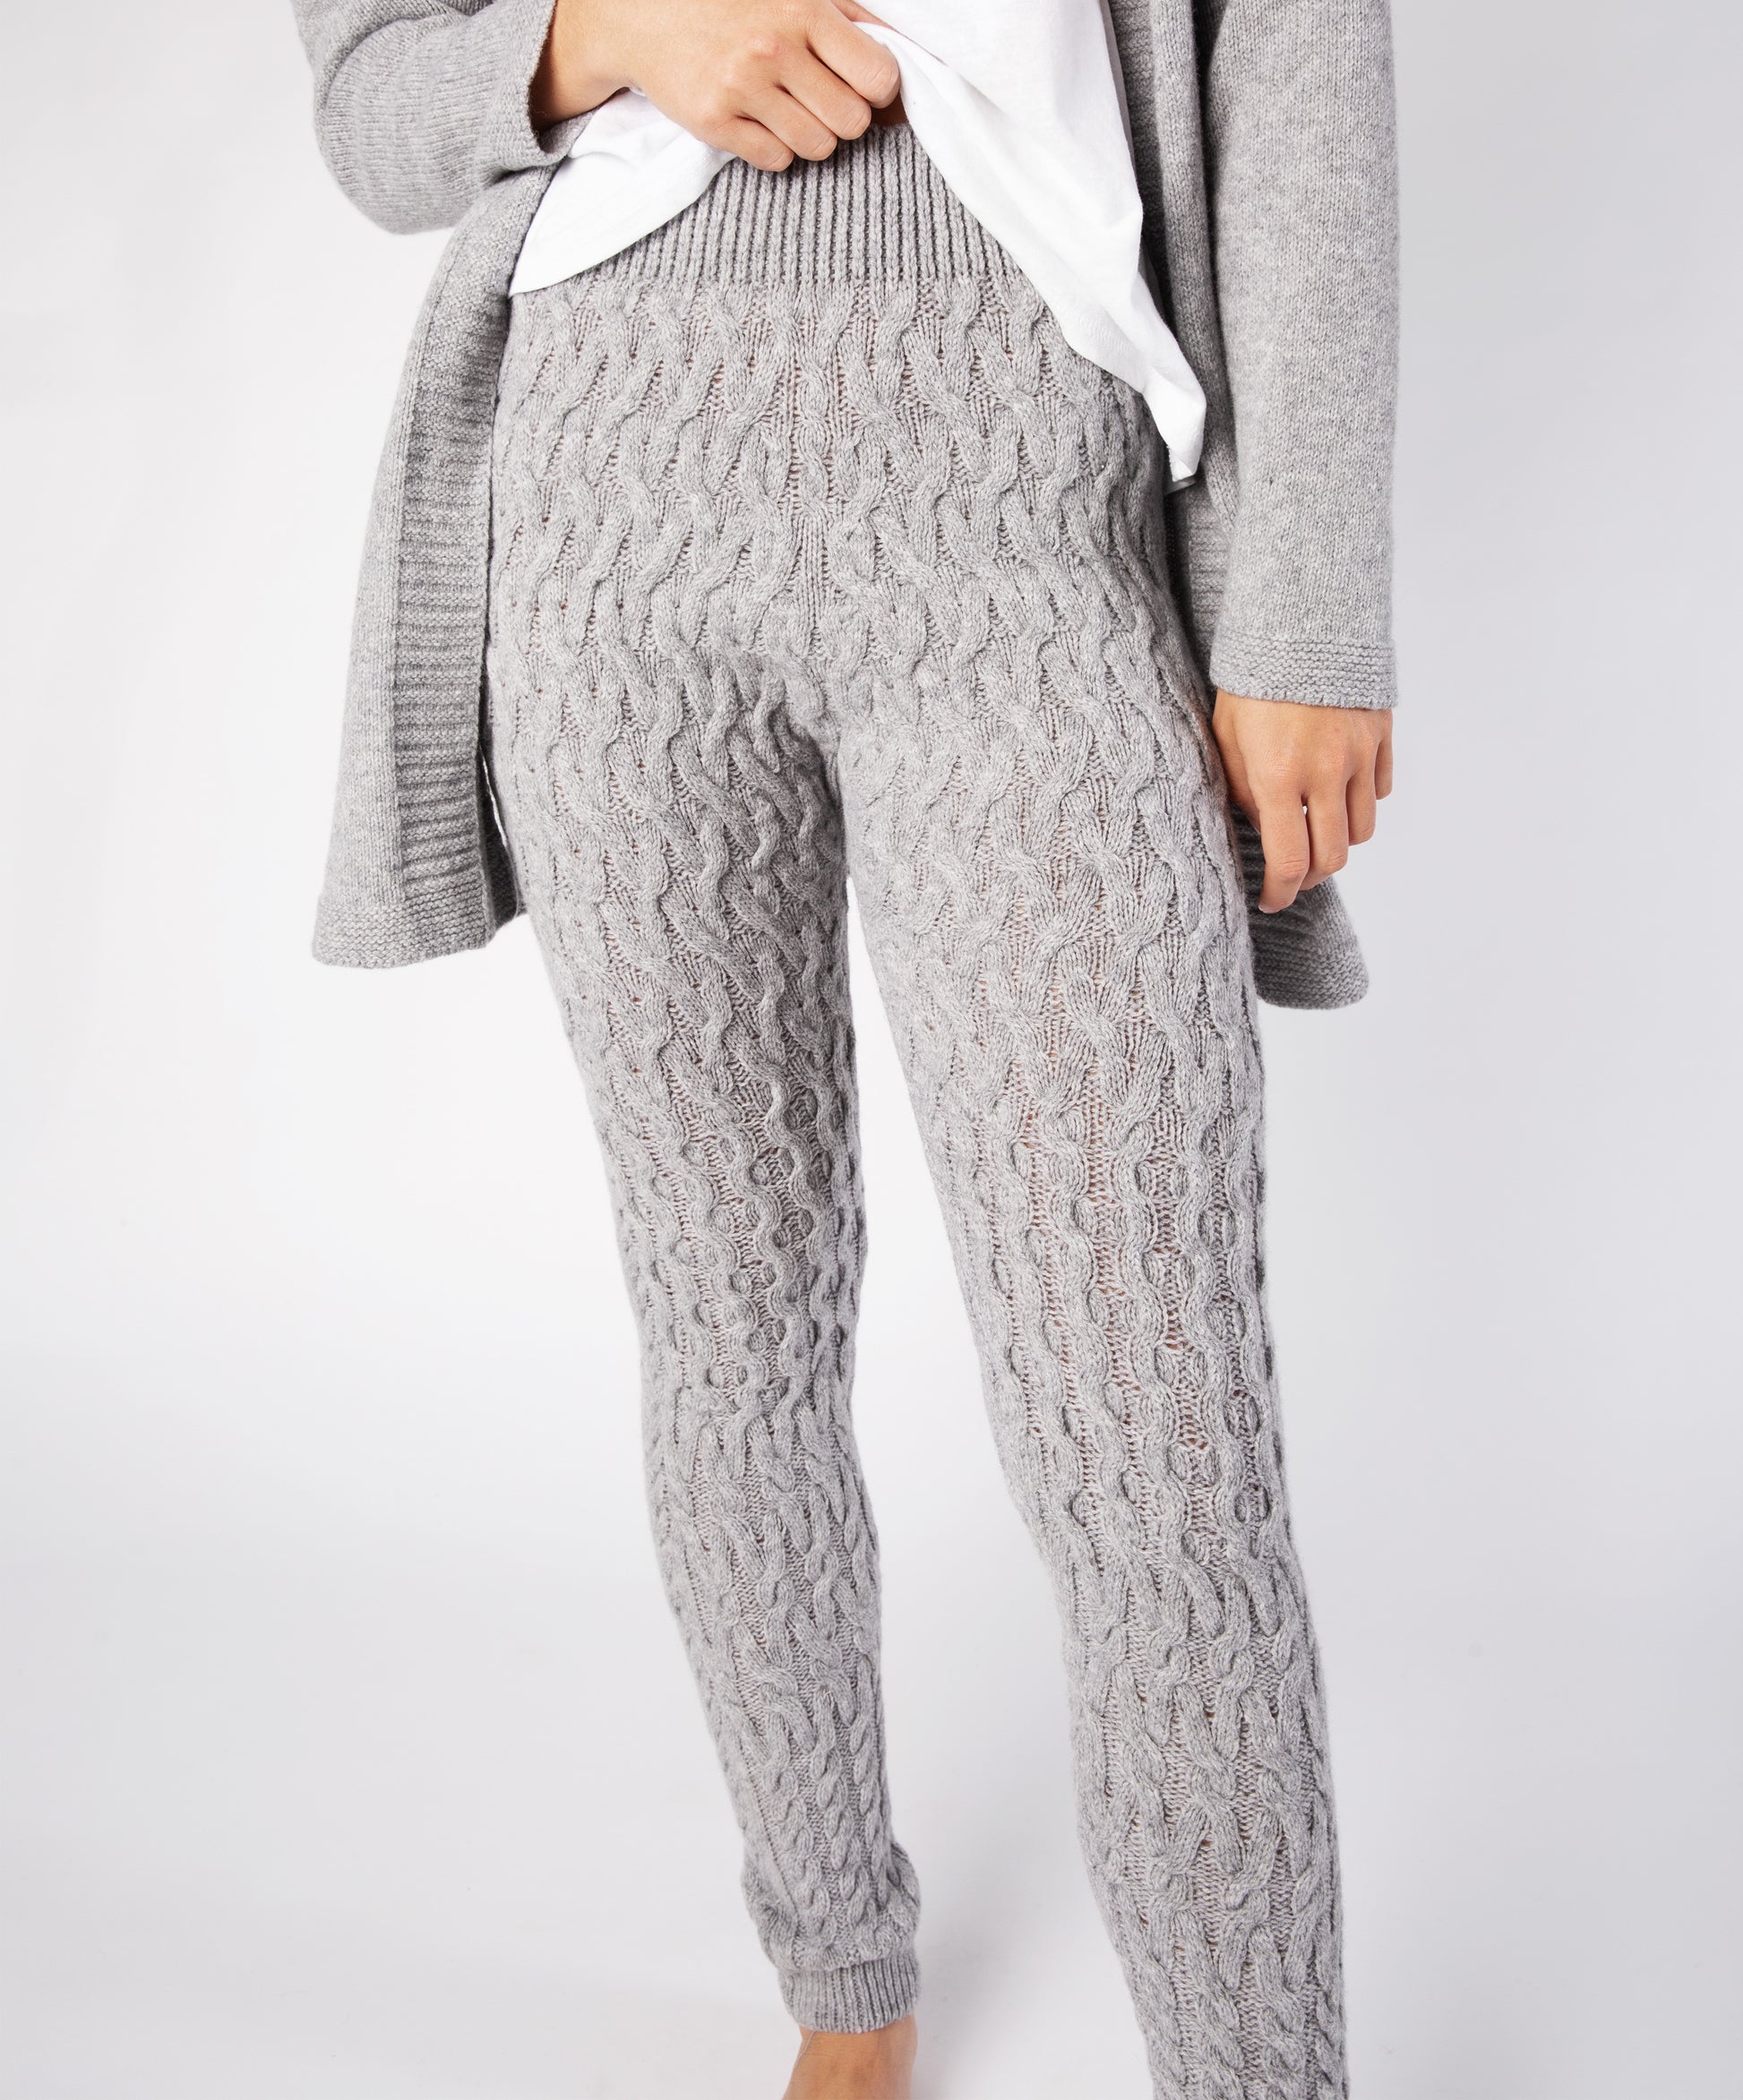 IrelandsEye Knitwear Aran Leggings Soft Grey